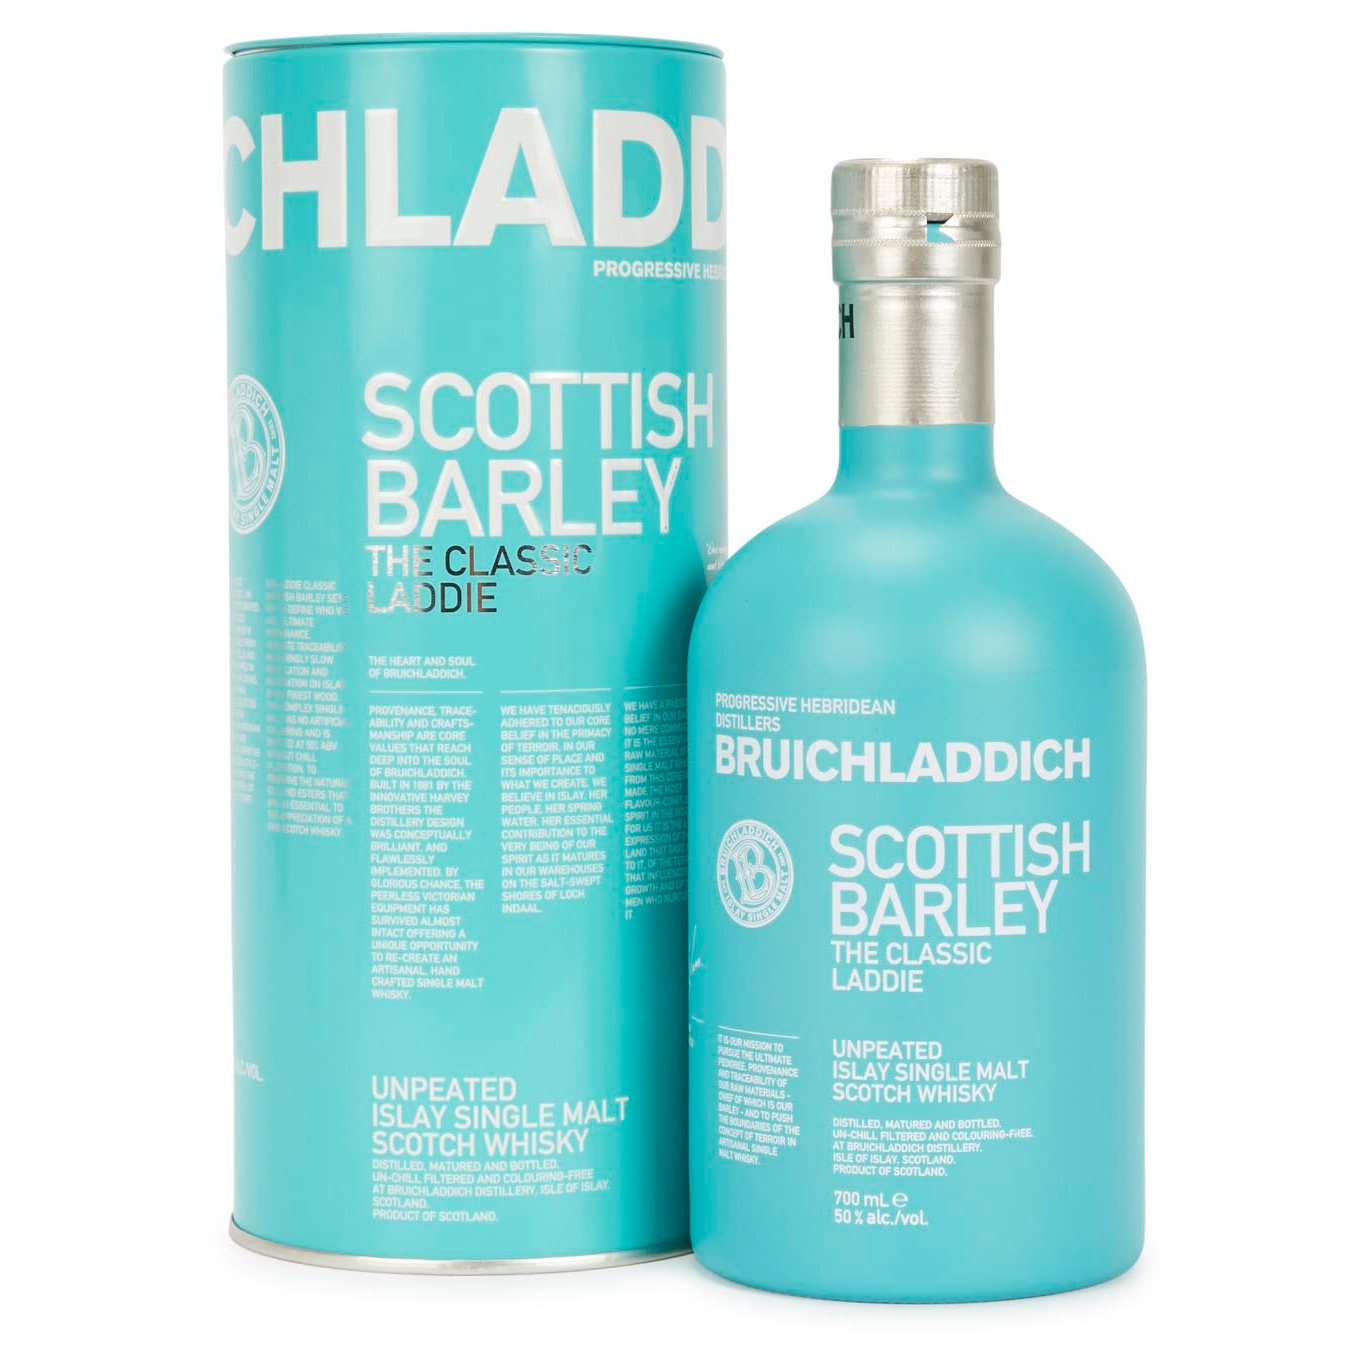 Bruichladdich Scottish Barley Whisky - The Classic Laddie